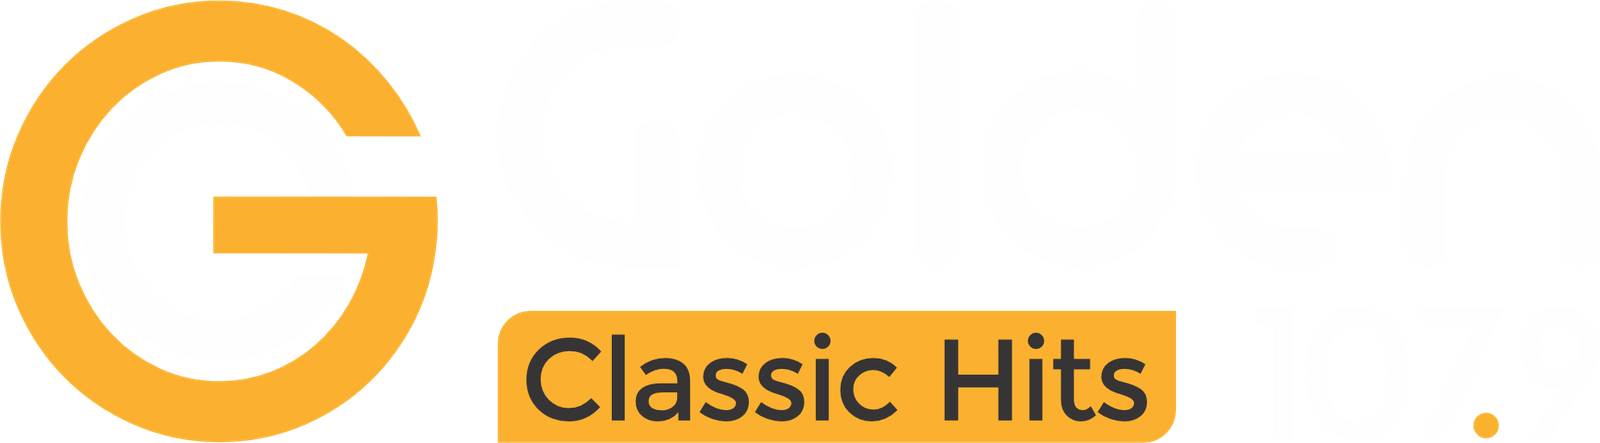 Golden FM 107.9 MHz | Classic Hits